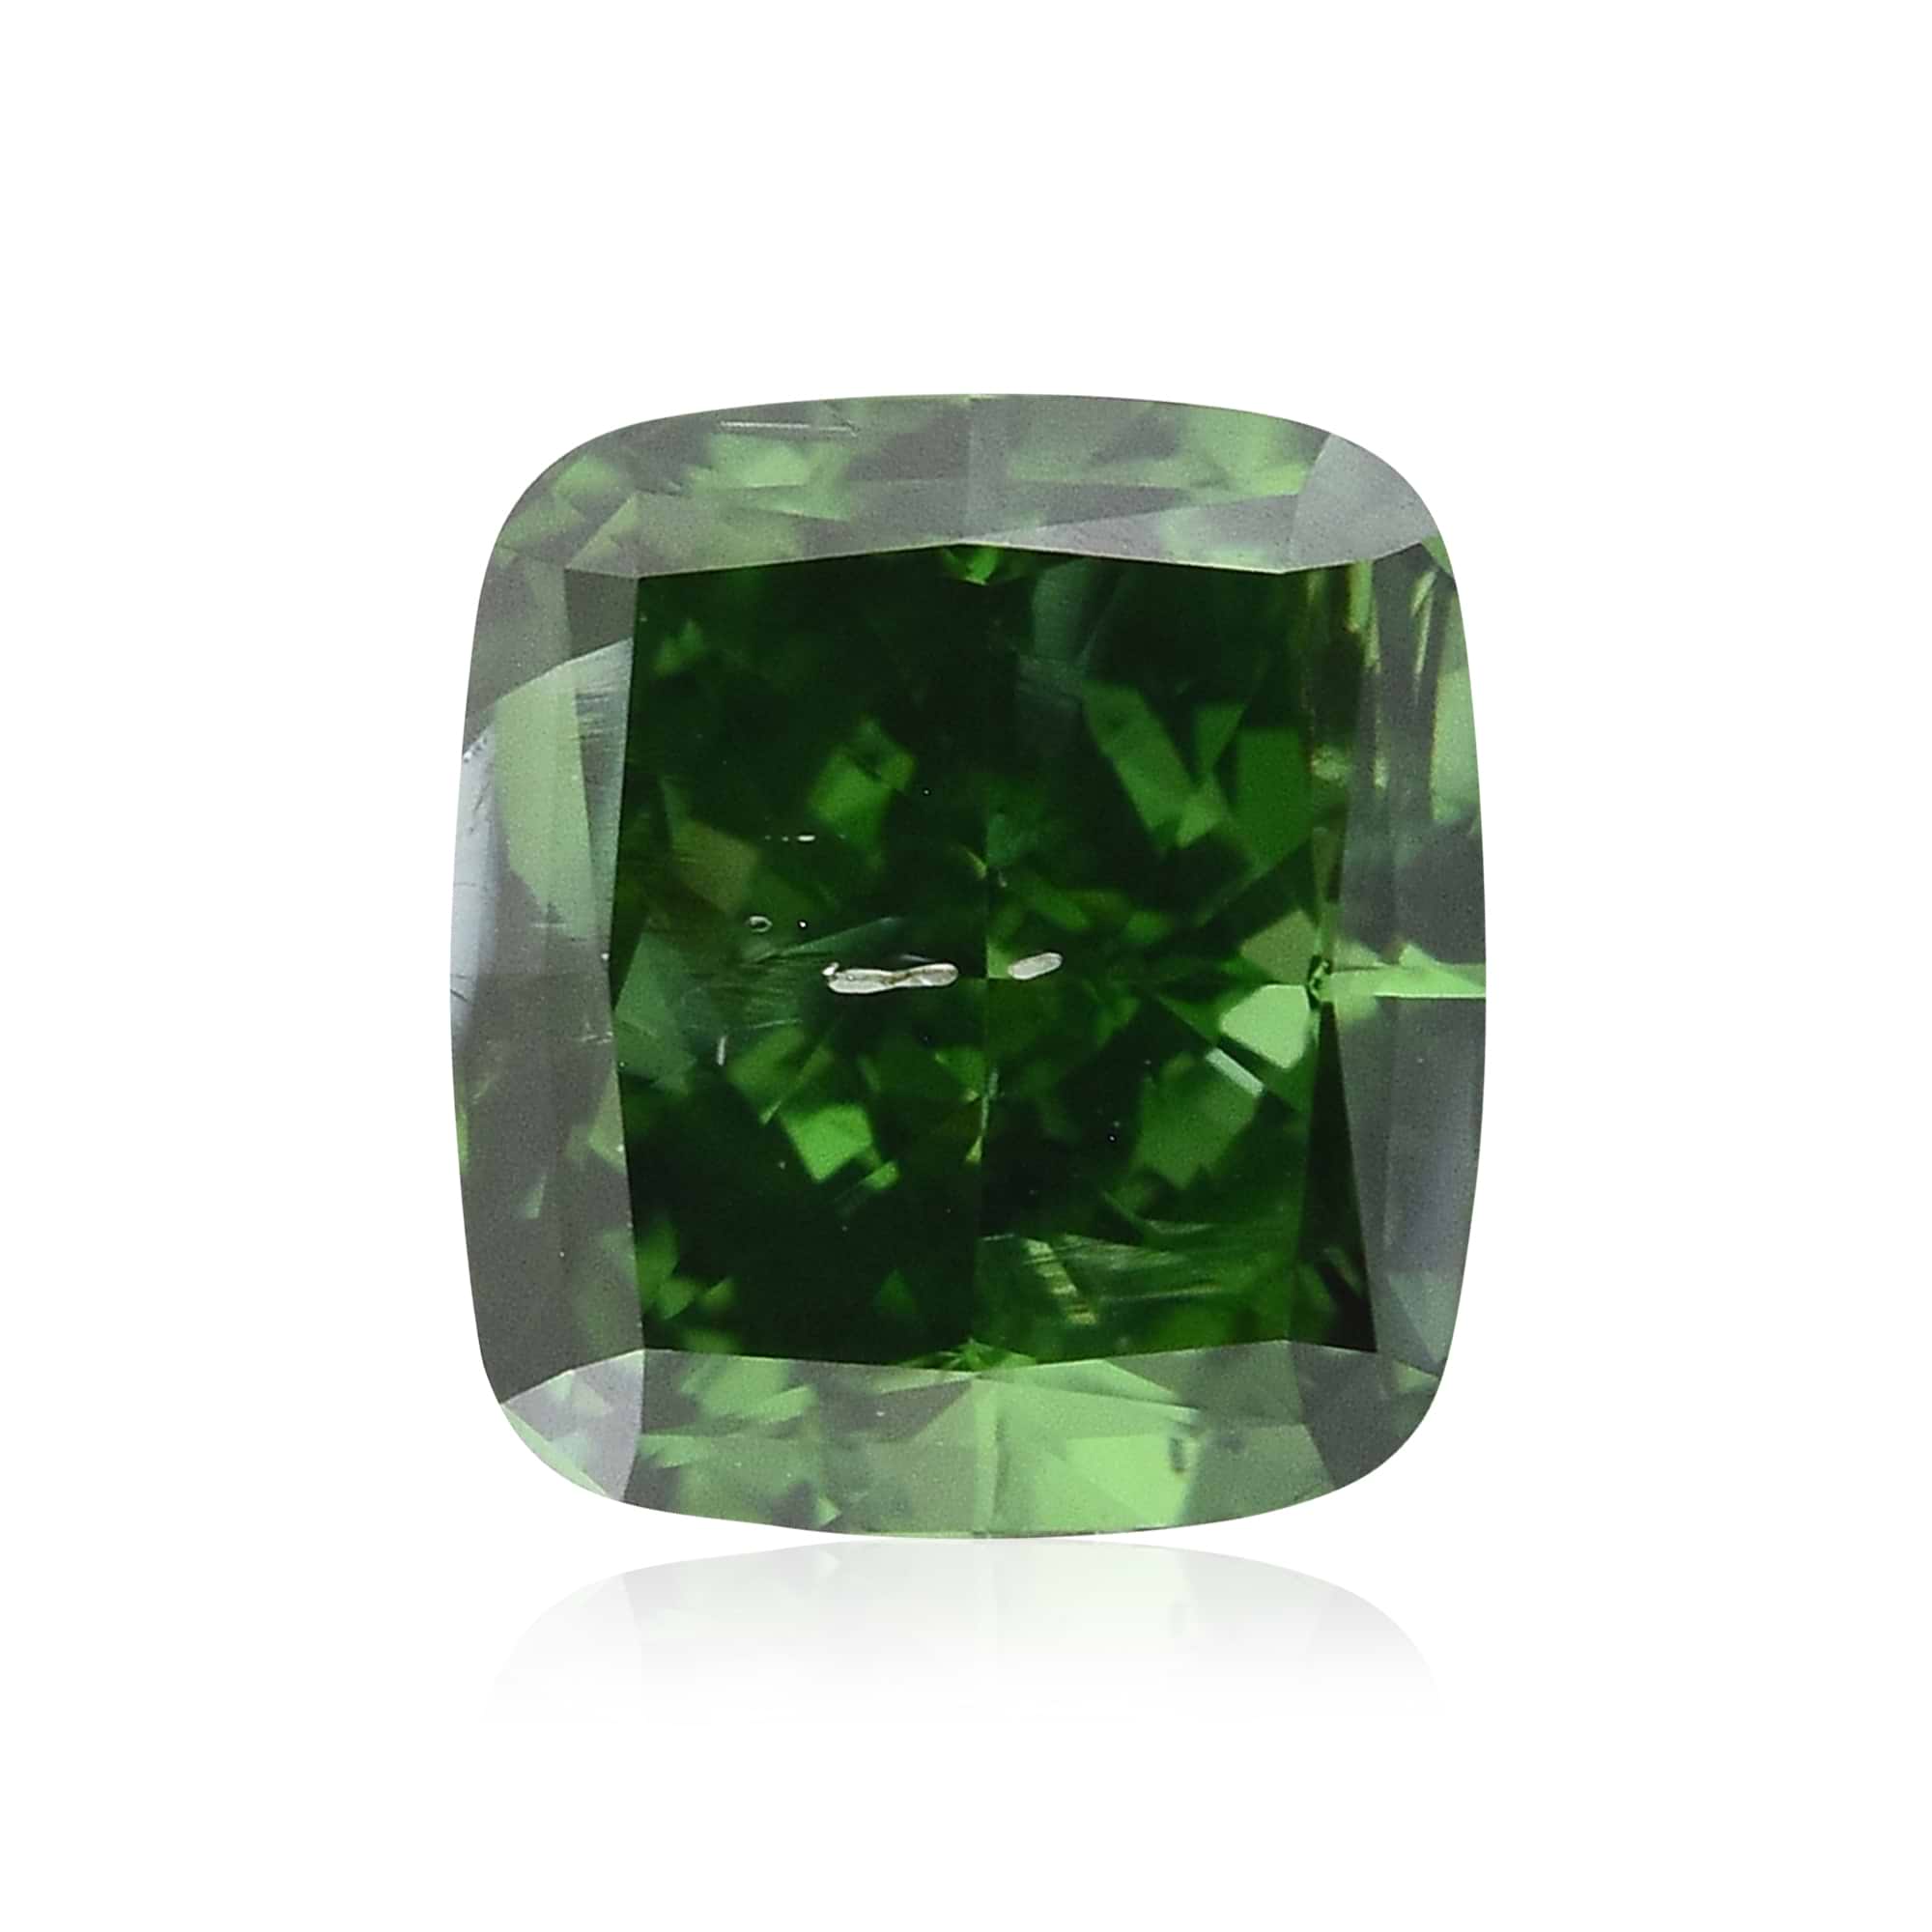 0.50 carat, Fancy Deep Green Diamond, Cushion Shape, I2 Clarity, GIA